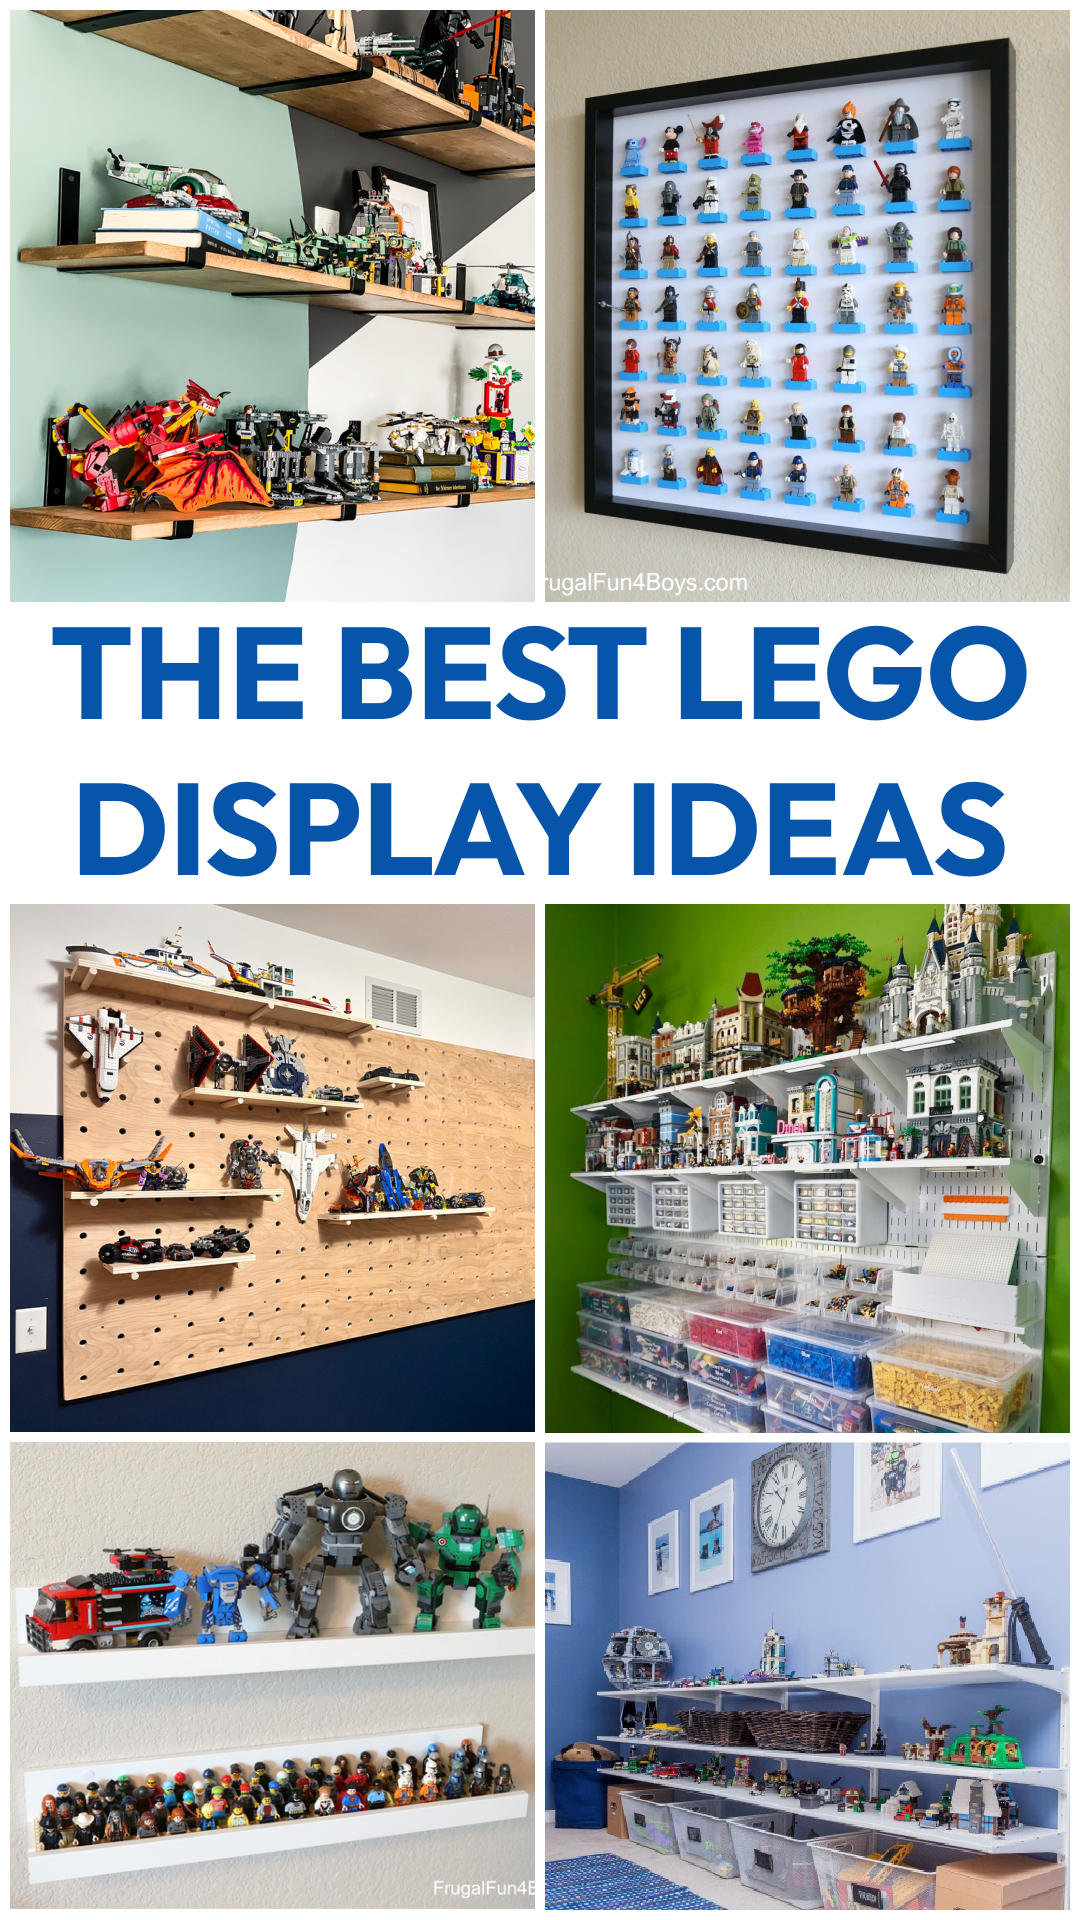 haat Turbine Electrificeren Awesome LEGO Display Shelf Ideas - Frugal Fun For Boys and Girls